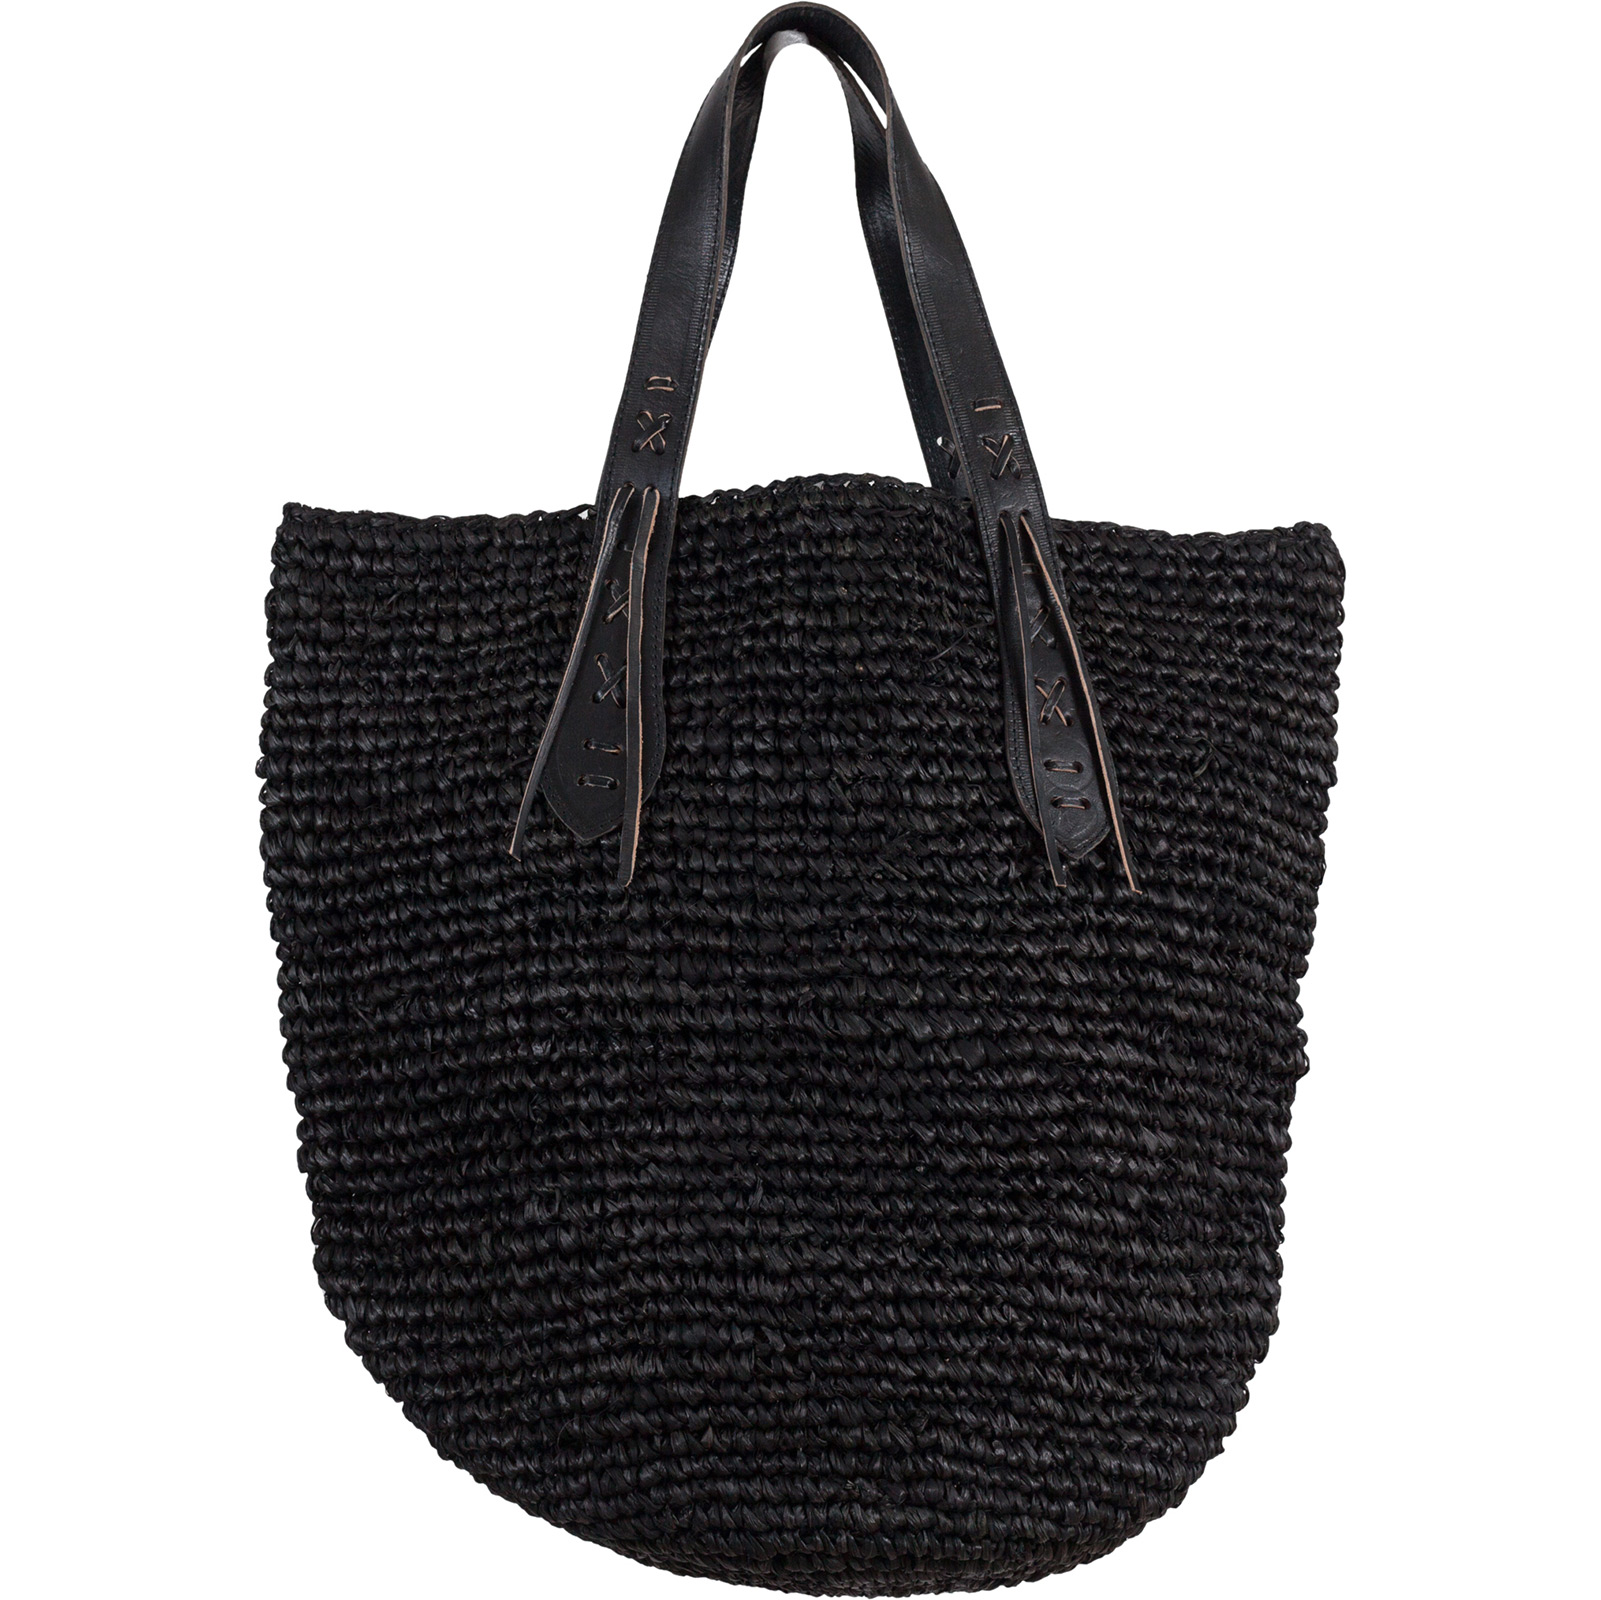 Xl Black Straw Bag With Leather Handles - Panier Xl Ibiza Black